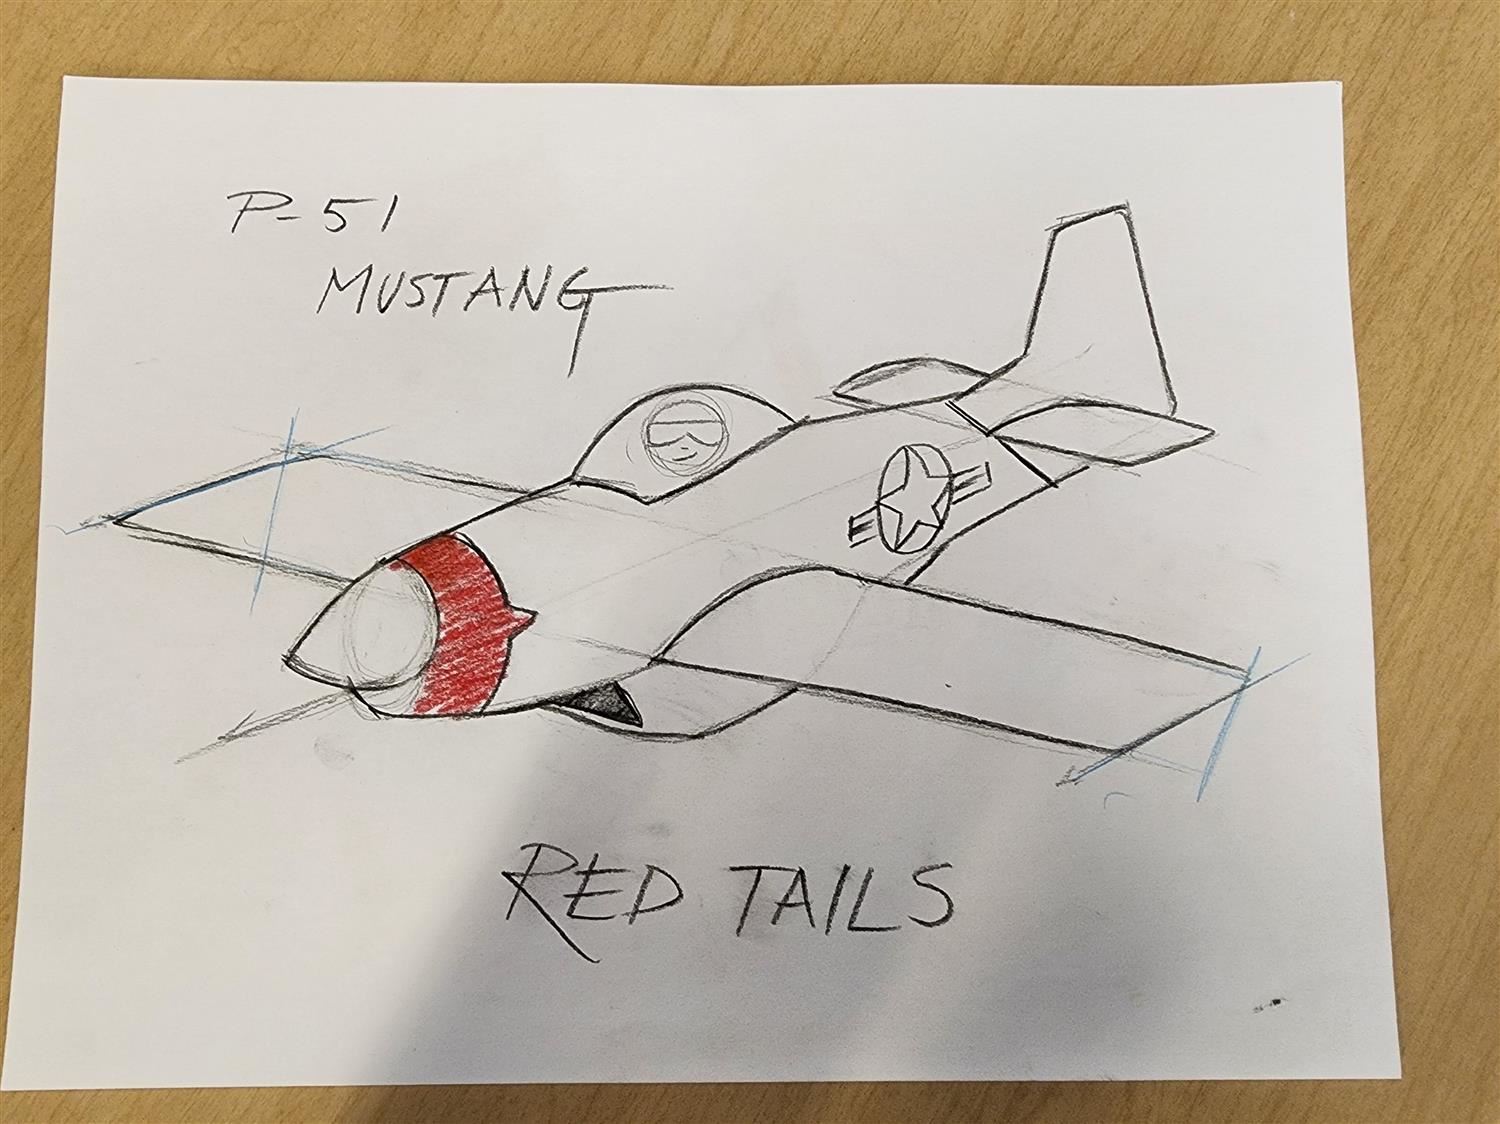 Line drawing of a P-51 mustang drew by art teacher Mr. Knapp.